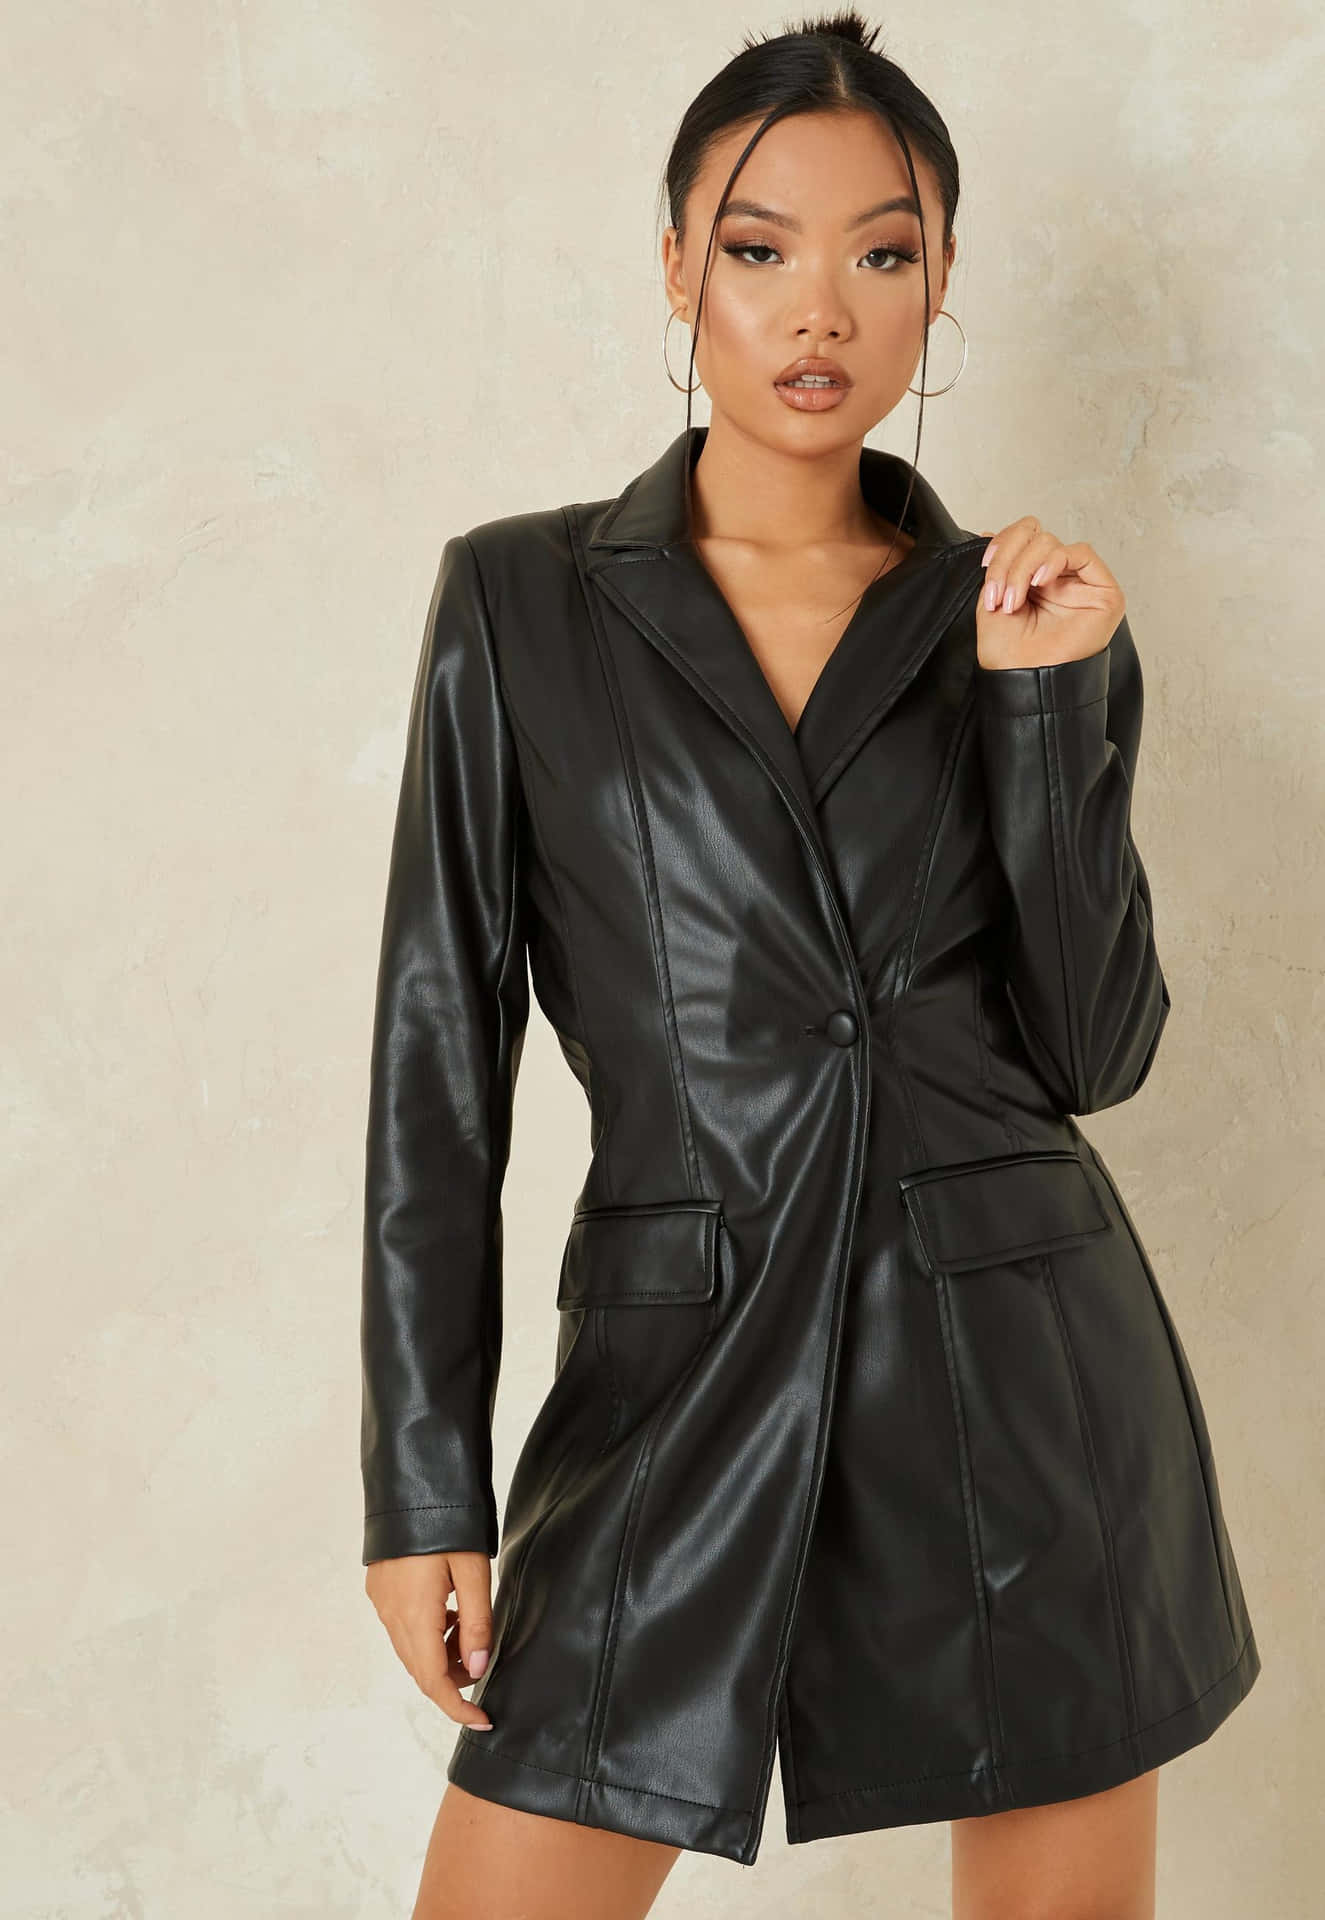 A Woman In A Black Leather Blazer Dress